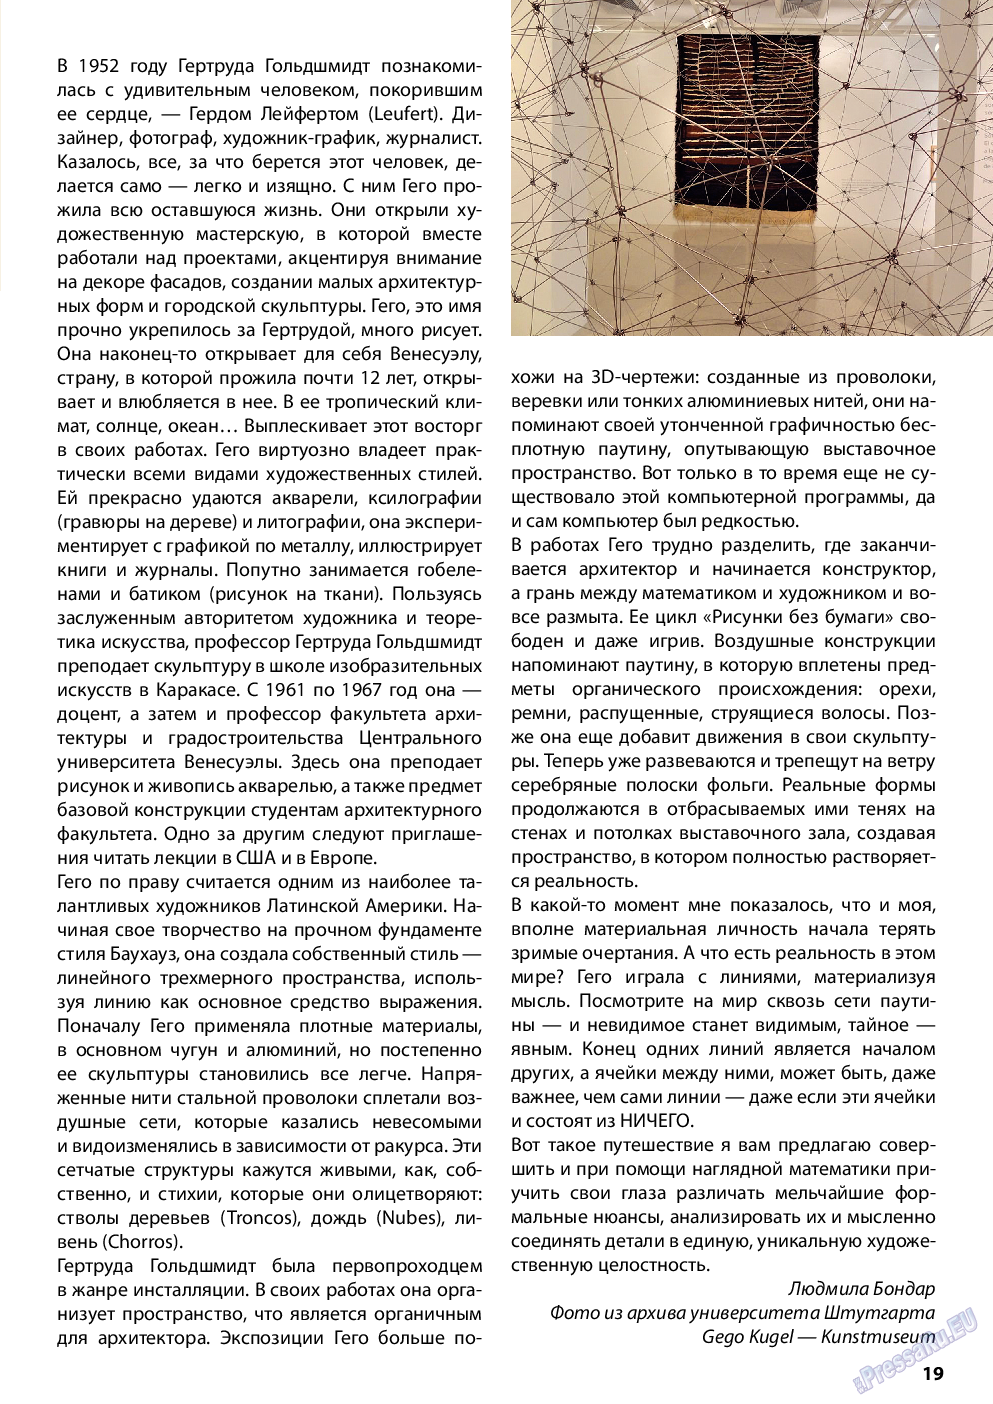 Wadim, журнал. 2014 №5 стр.19